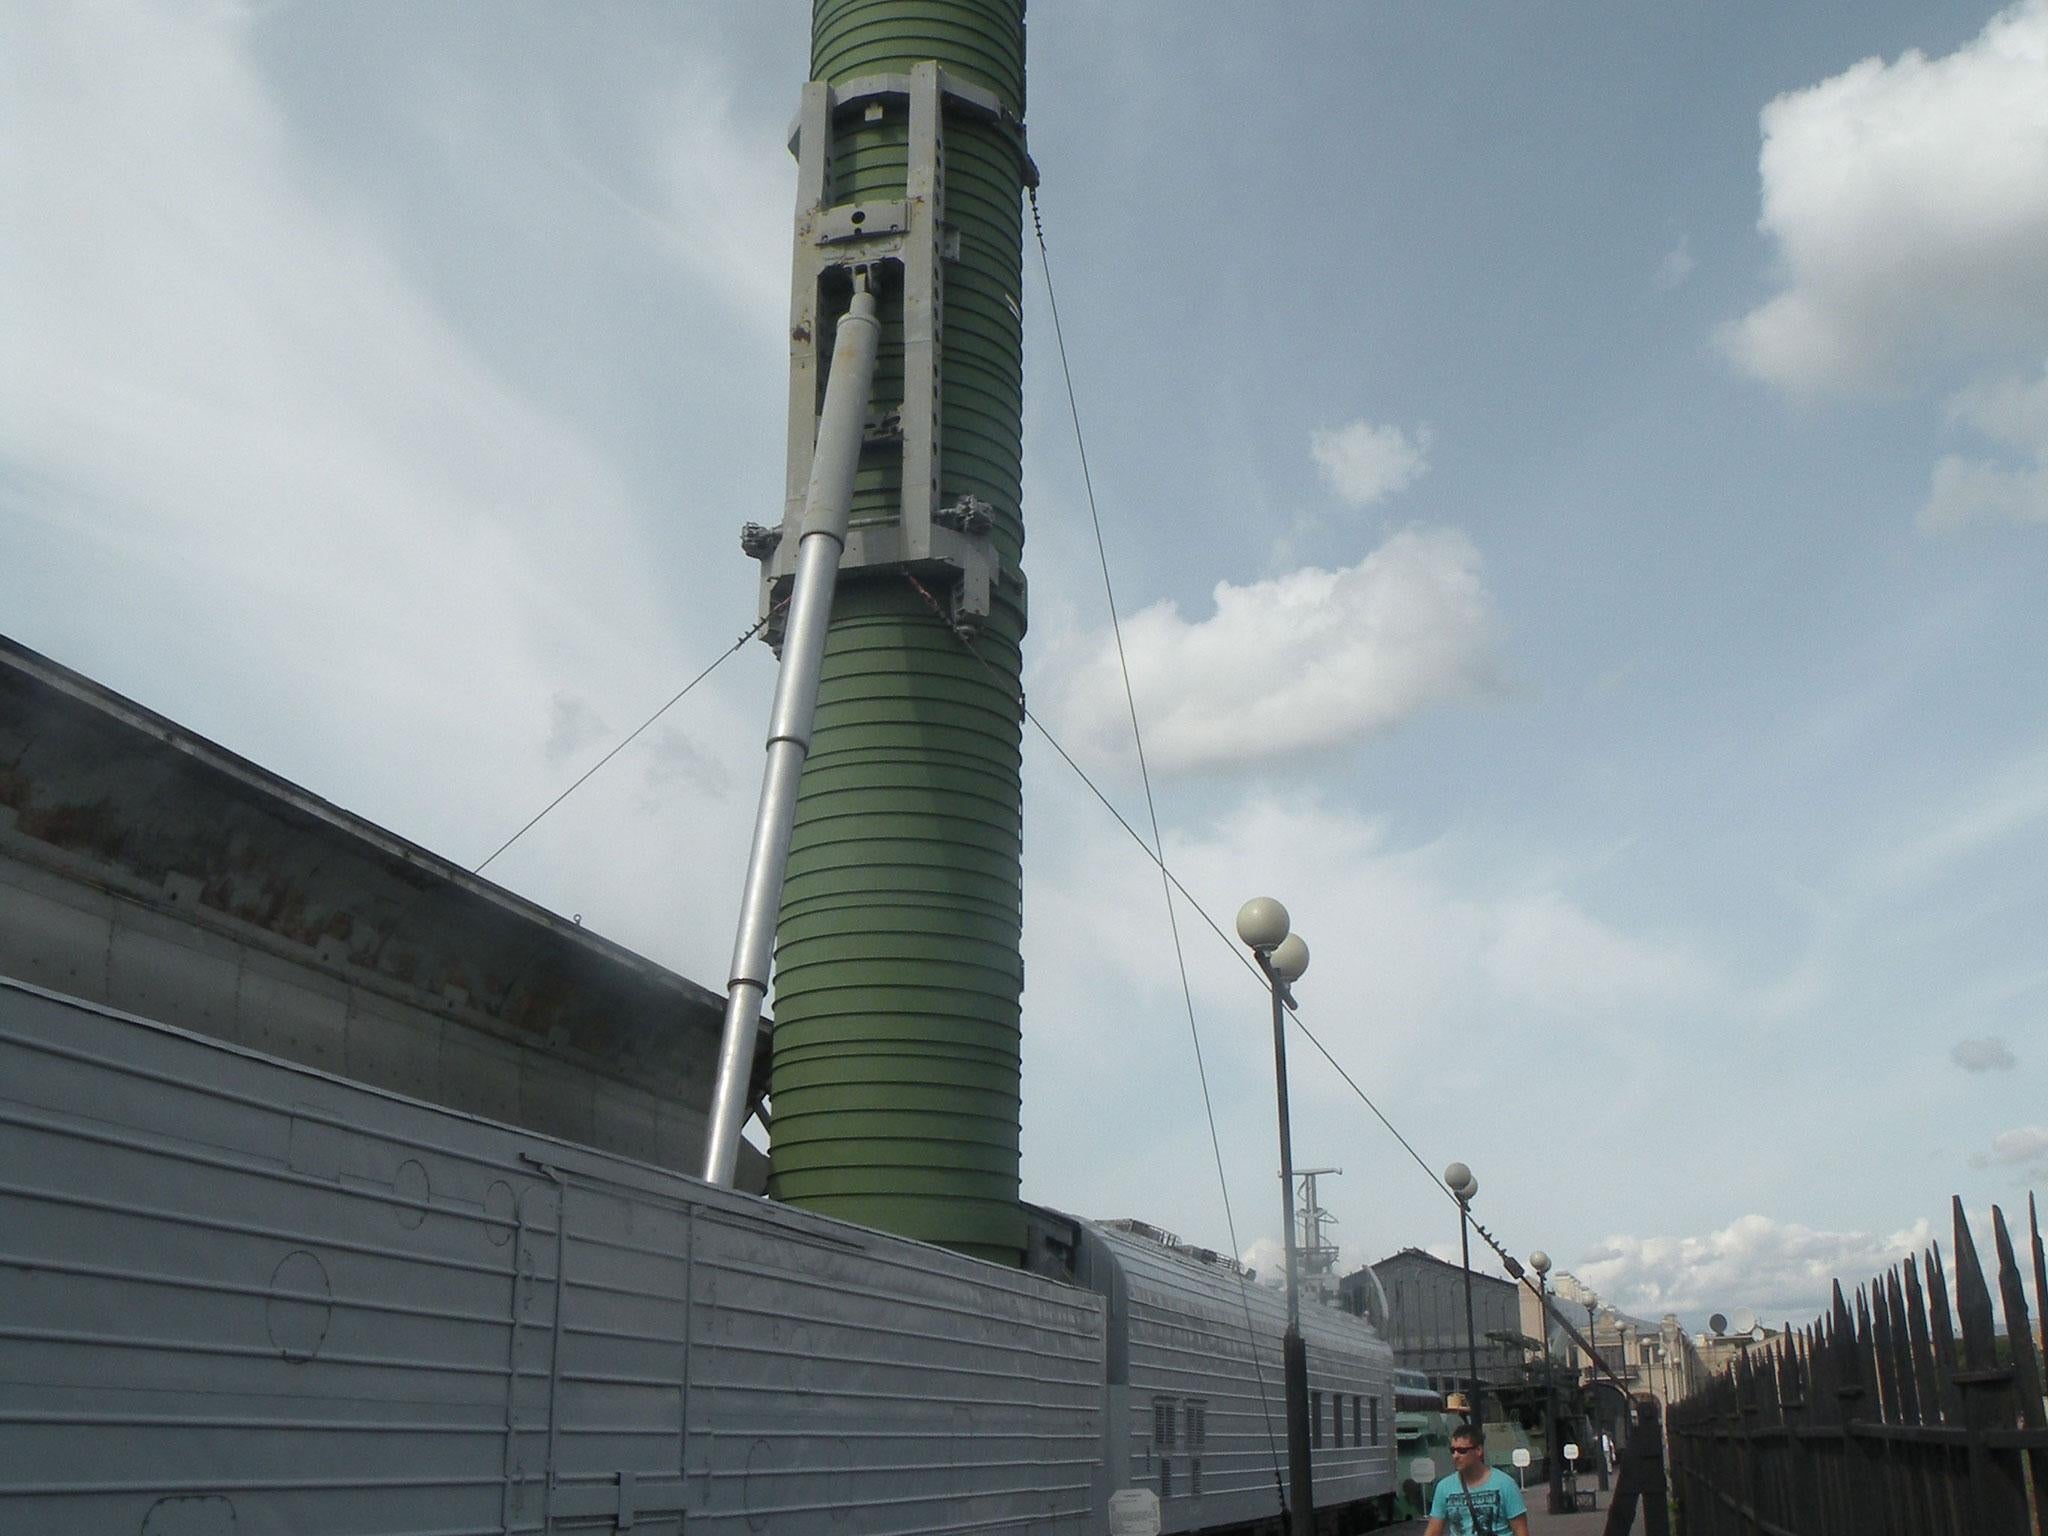 The Barguzin is based on the Soviet-era Molodets missile trains